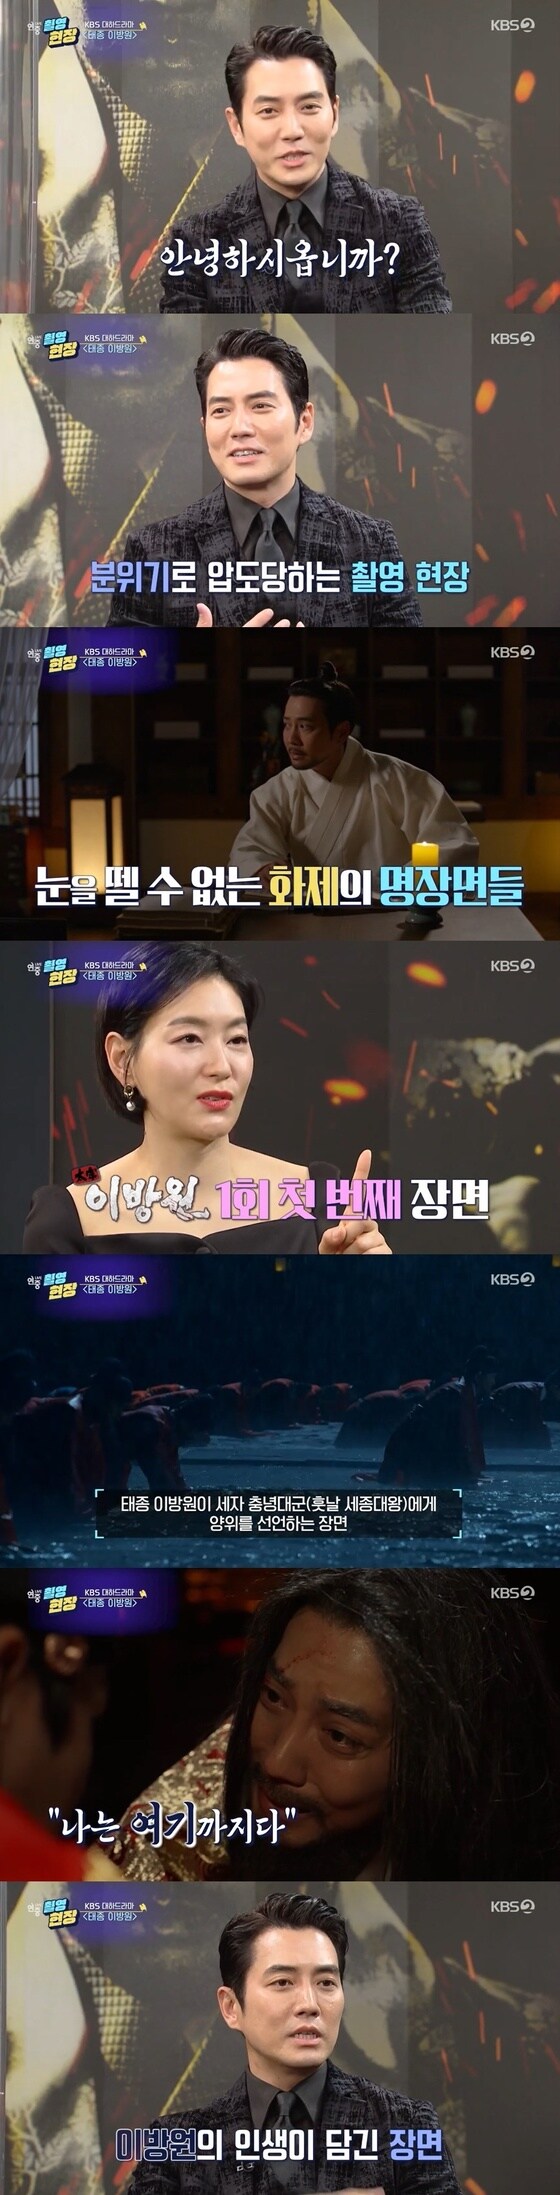 KBS 2TV '연중 라이브' 캡처 © 뉴스1